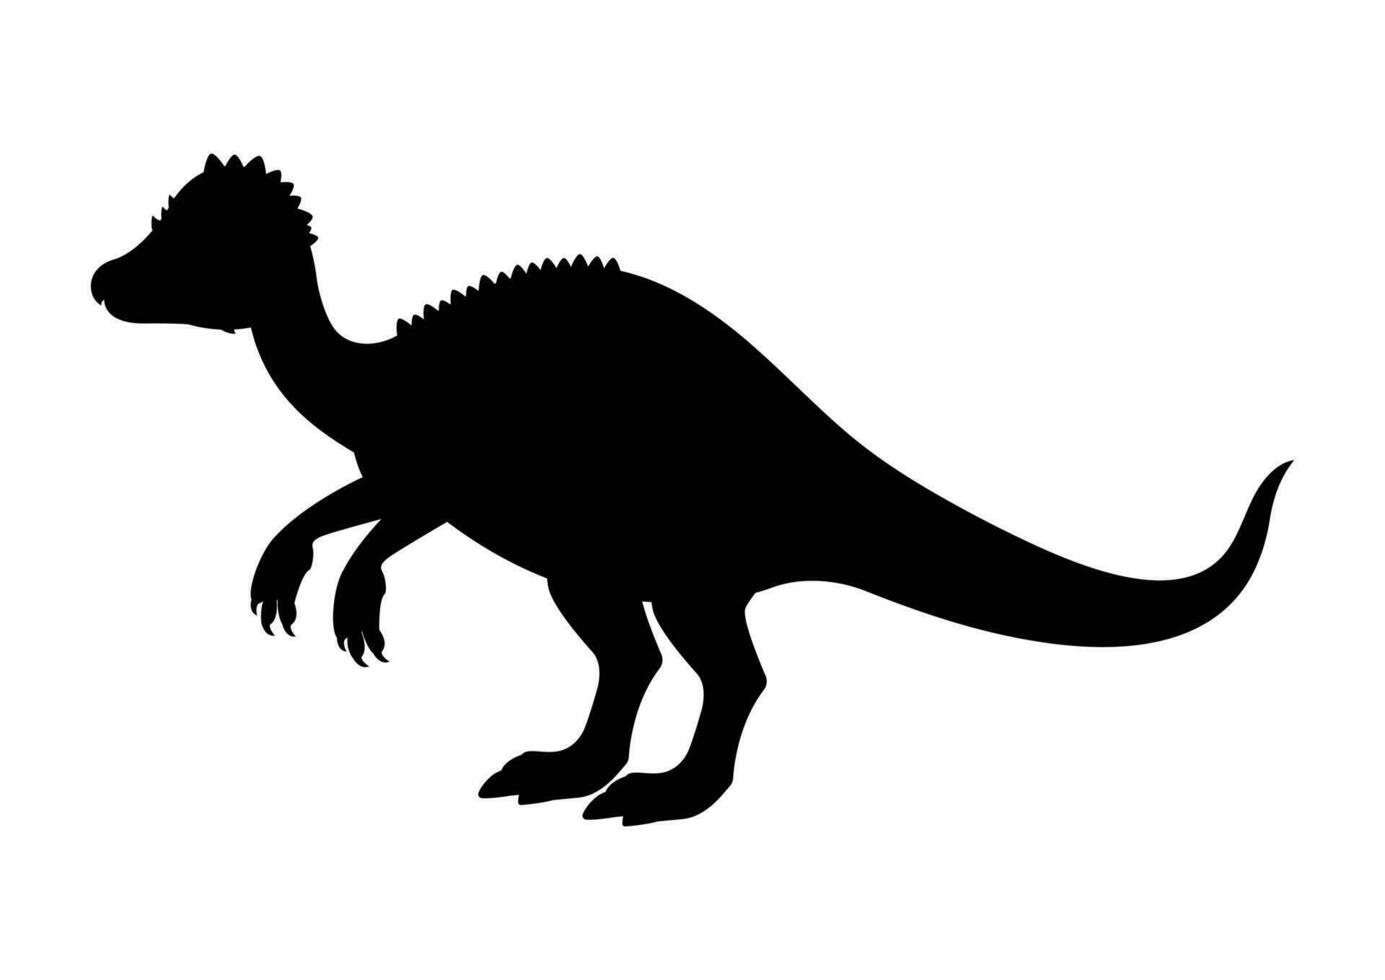 Pachycephalosaurus Dinosaur Silhouette Vector Isolated on White Background